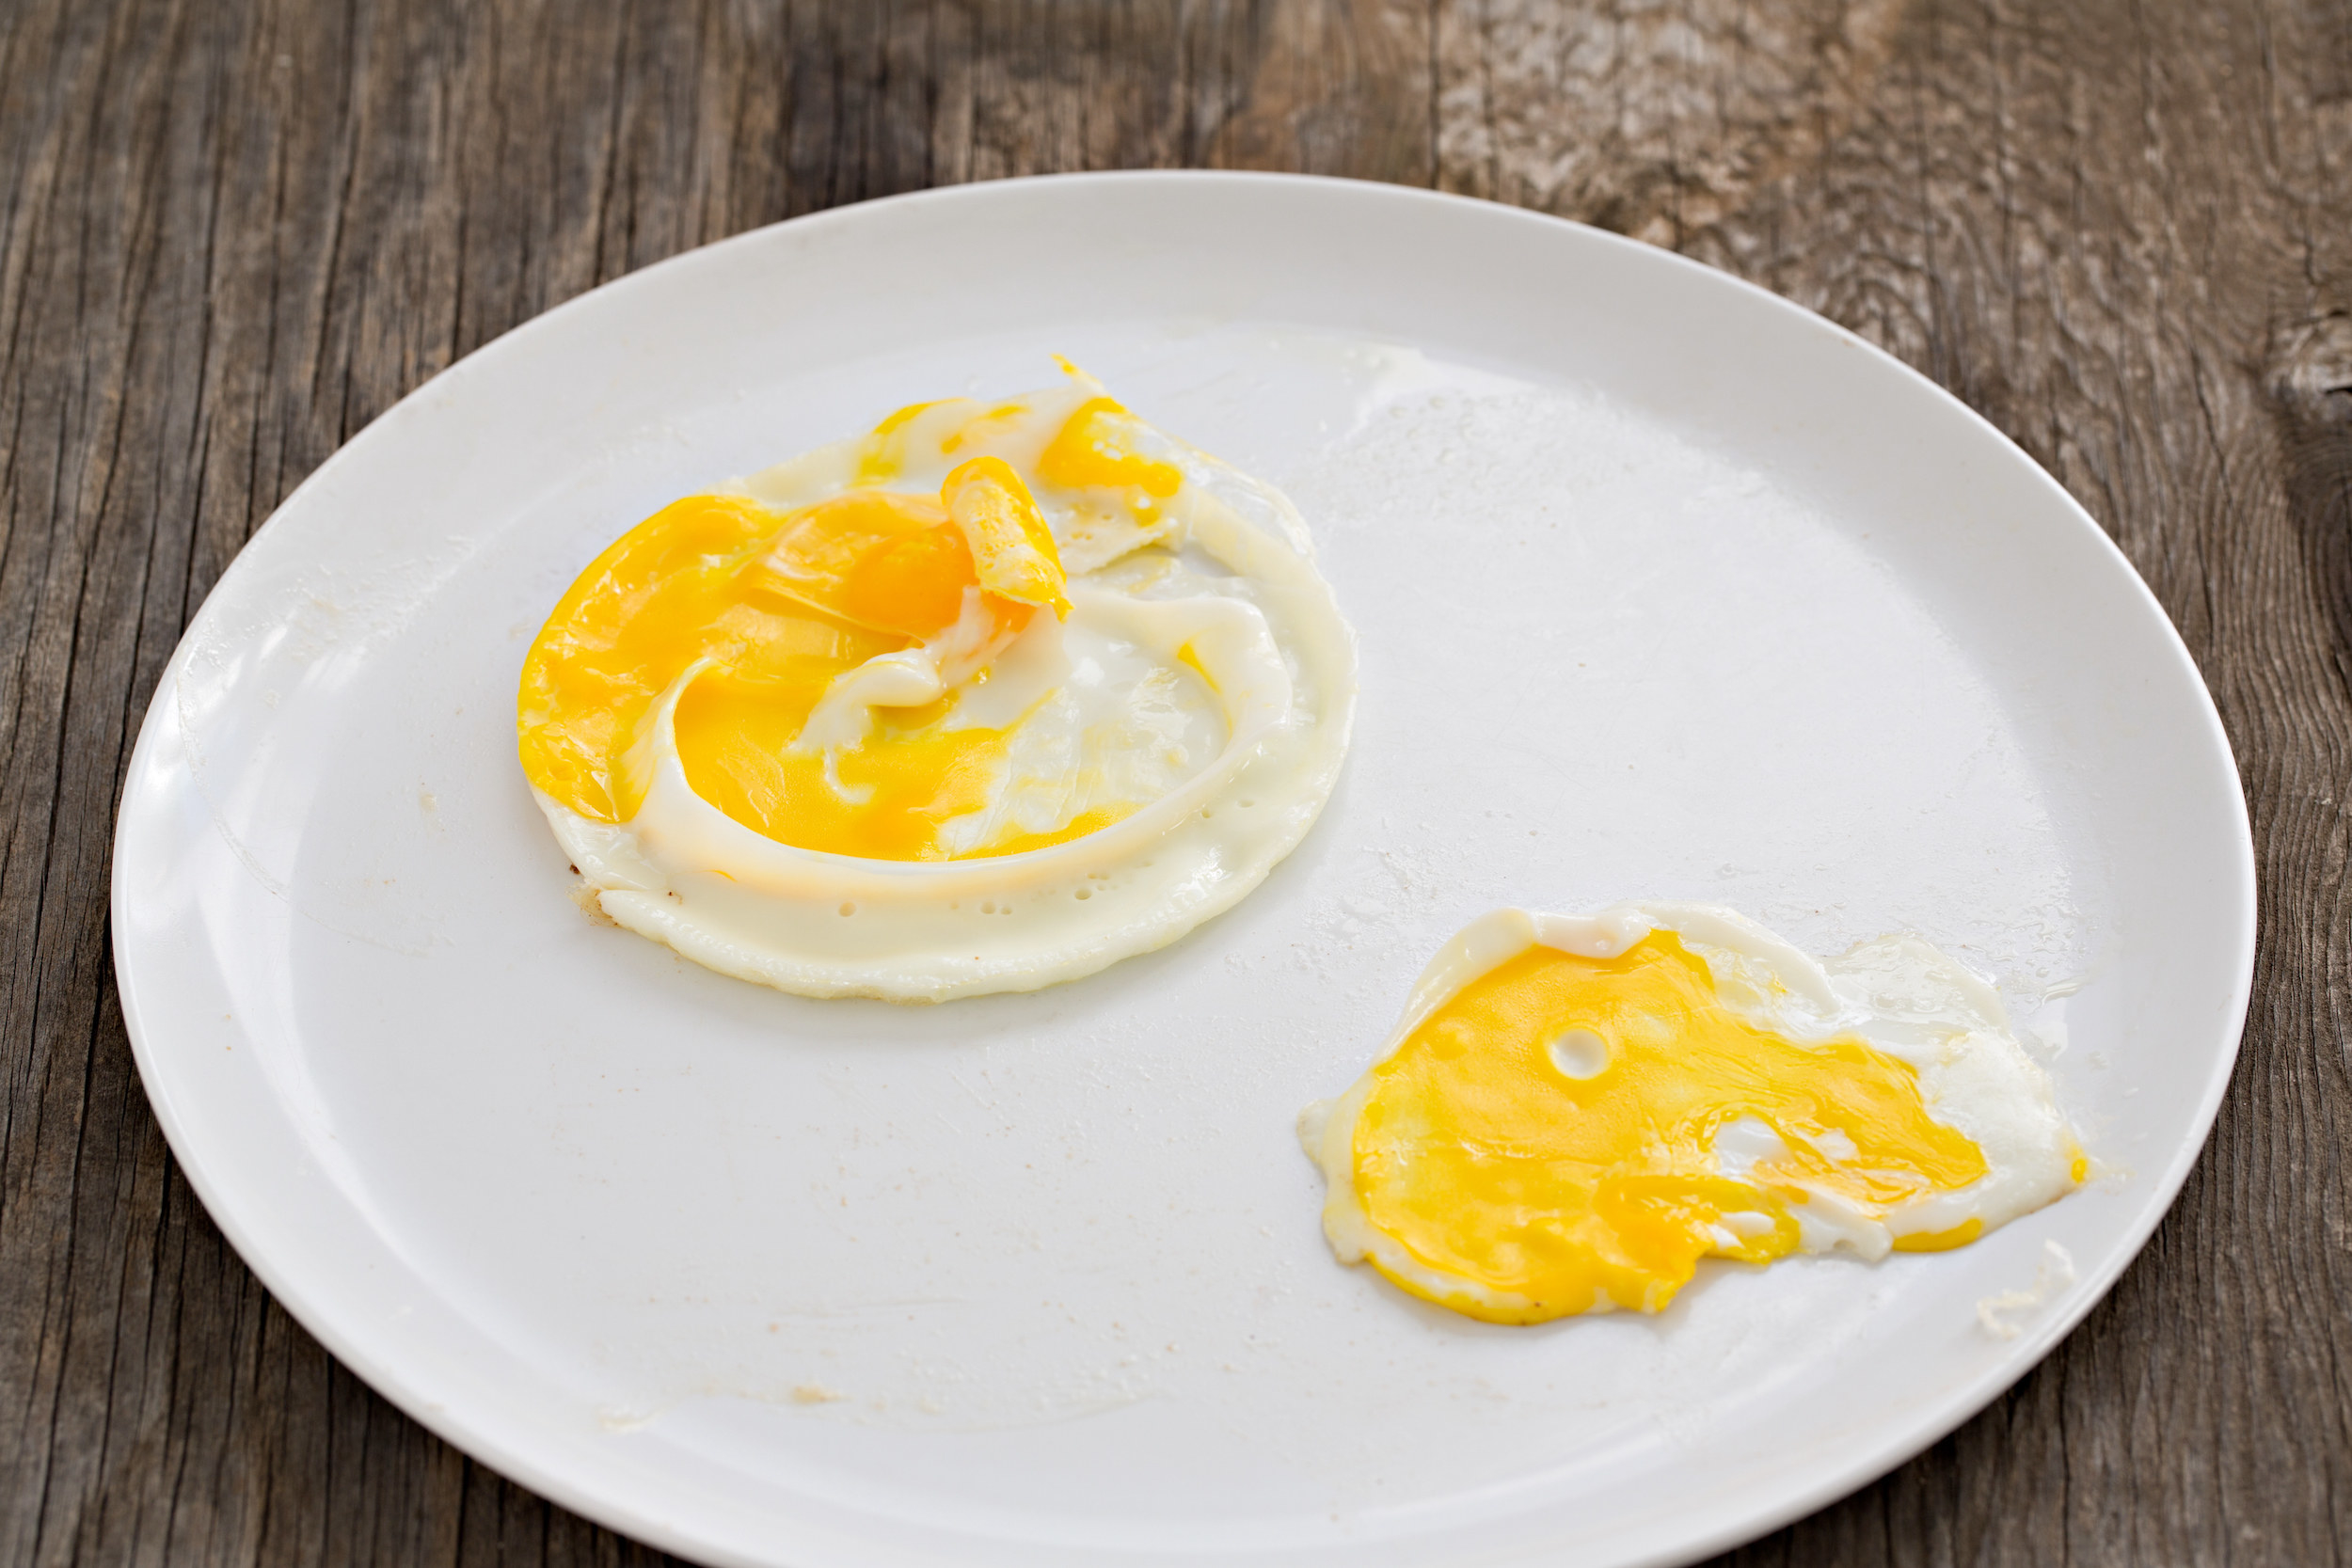 Eggs with broken yolks